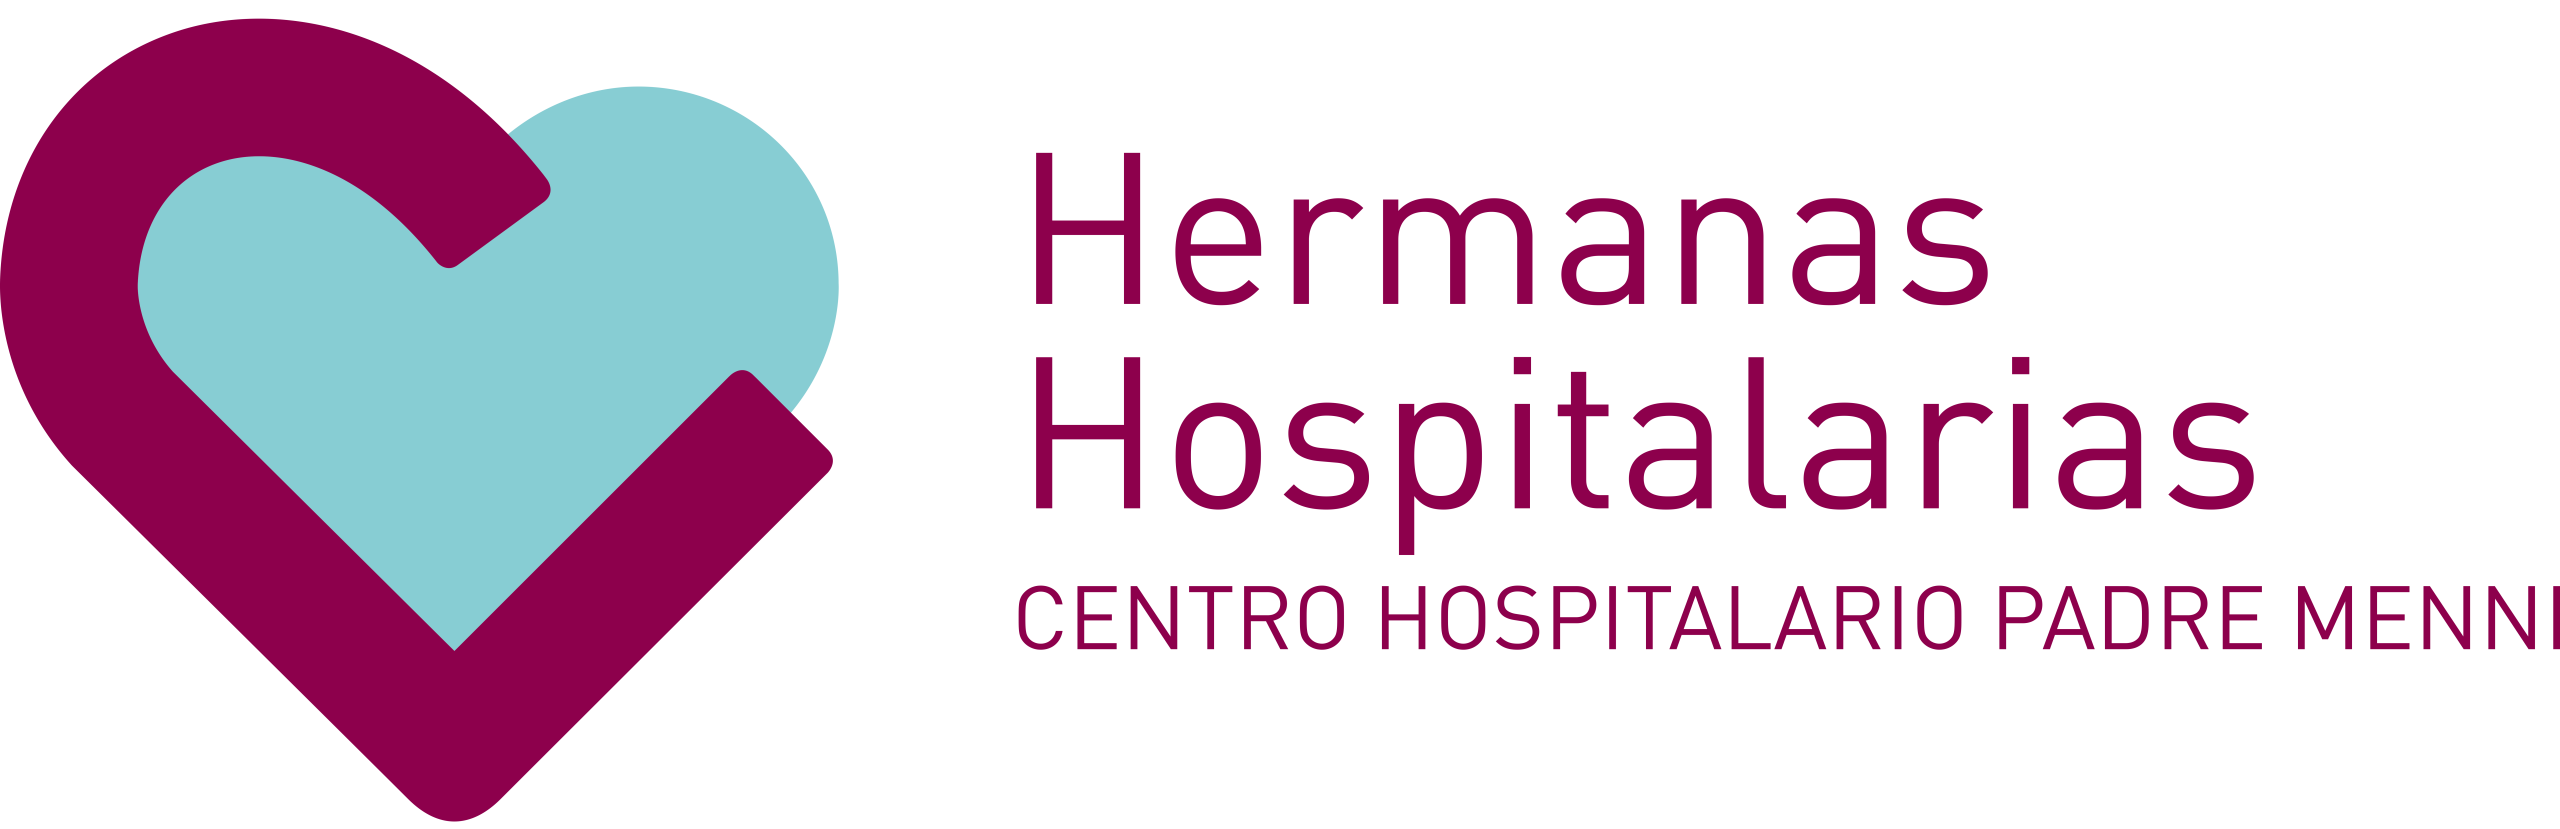 Hermanas Hospitalarias Santander